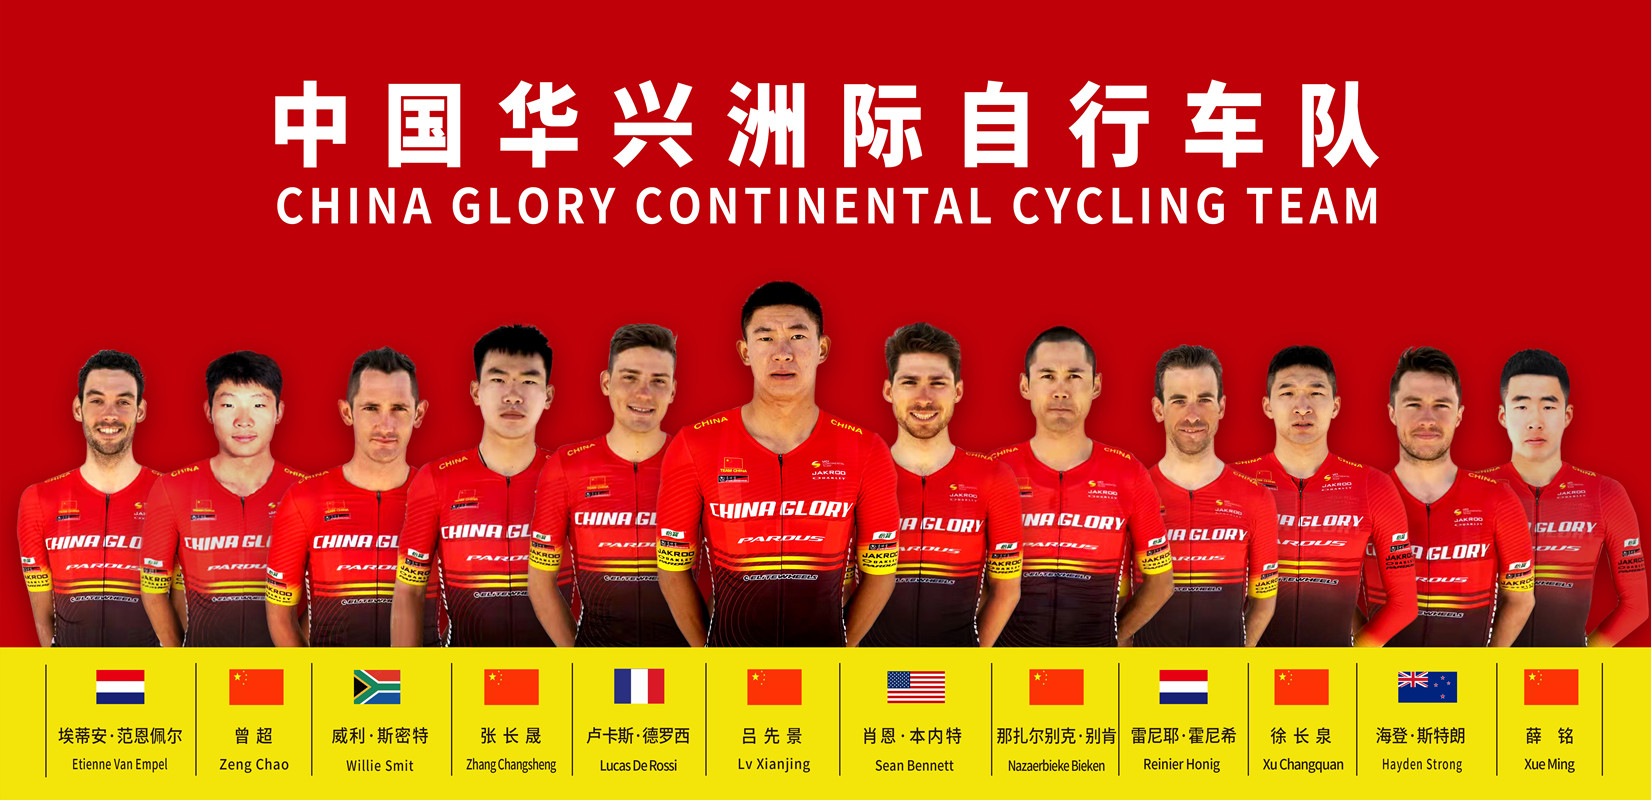 China Glory Rider Introduction